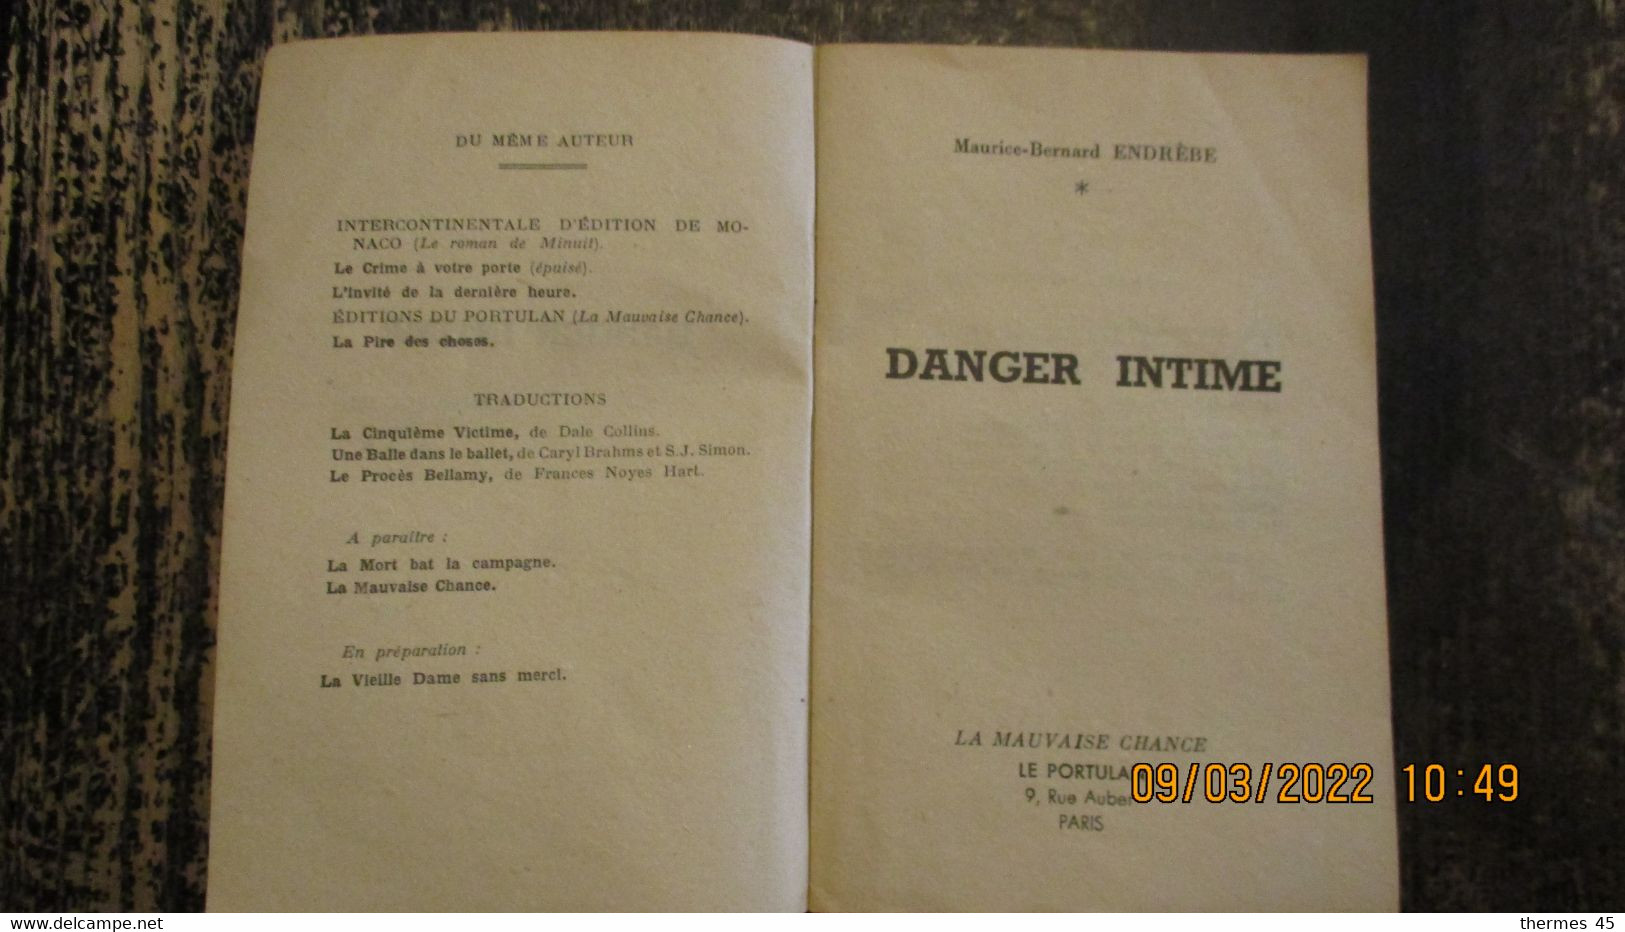 DEDICACE / ENDREBE / DANGER INTIME / 1948 LE PORTULAN - LA MAUVAISE CHANCE - Portulan, Le